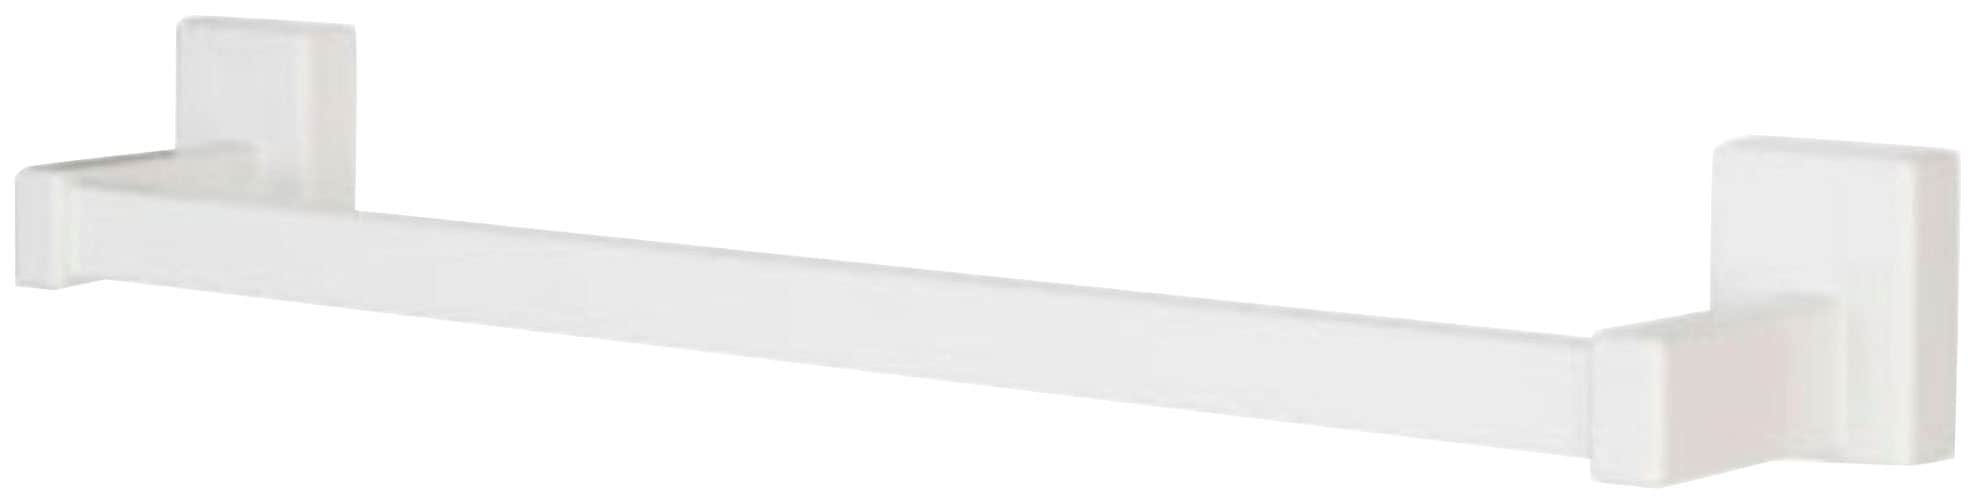 Ximax Handtuchhalter »Handtuchstange, magnetisch«, Handtuchstange, magnetisch, 500 mm, Weiß